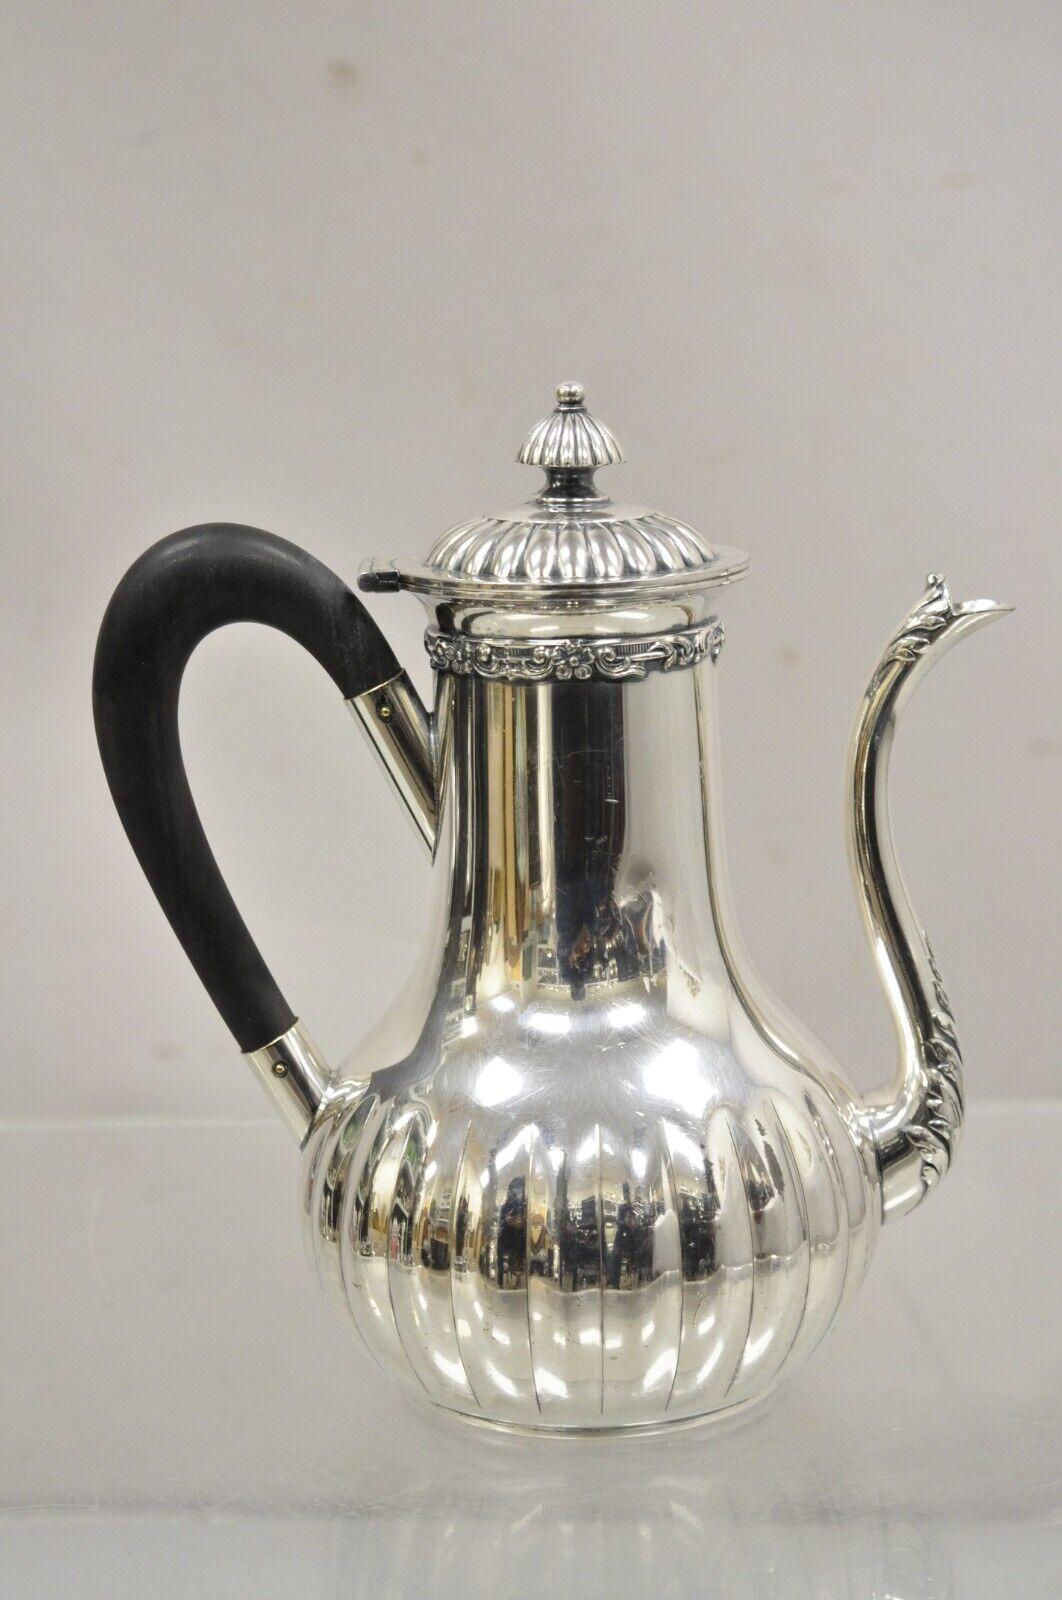 Antique English Edwardian James W Tufts Silver Plated Tea Pot Coffee Pot. Item featuring Wooden handle, original hallmark, nice antique item. Circa Early 20th Century. Measurements: 9